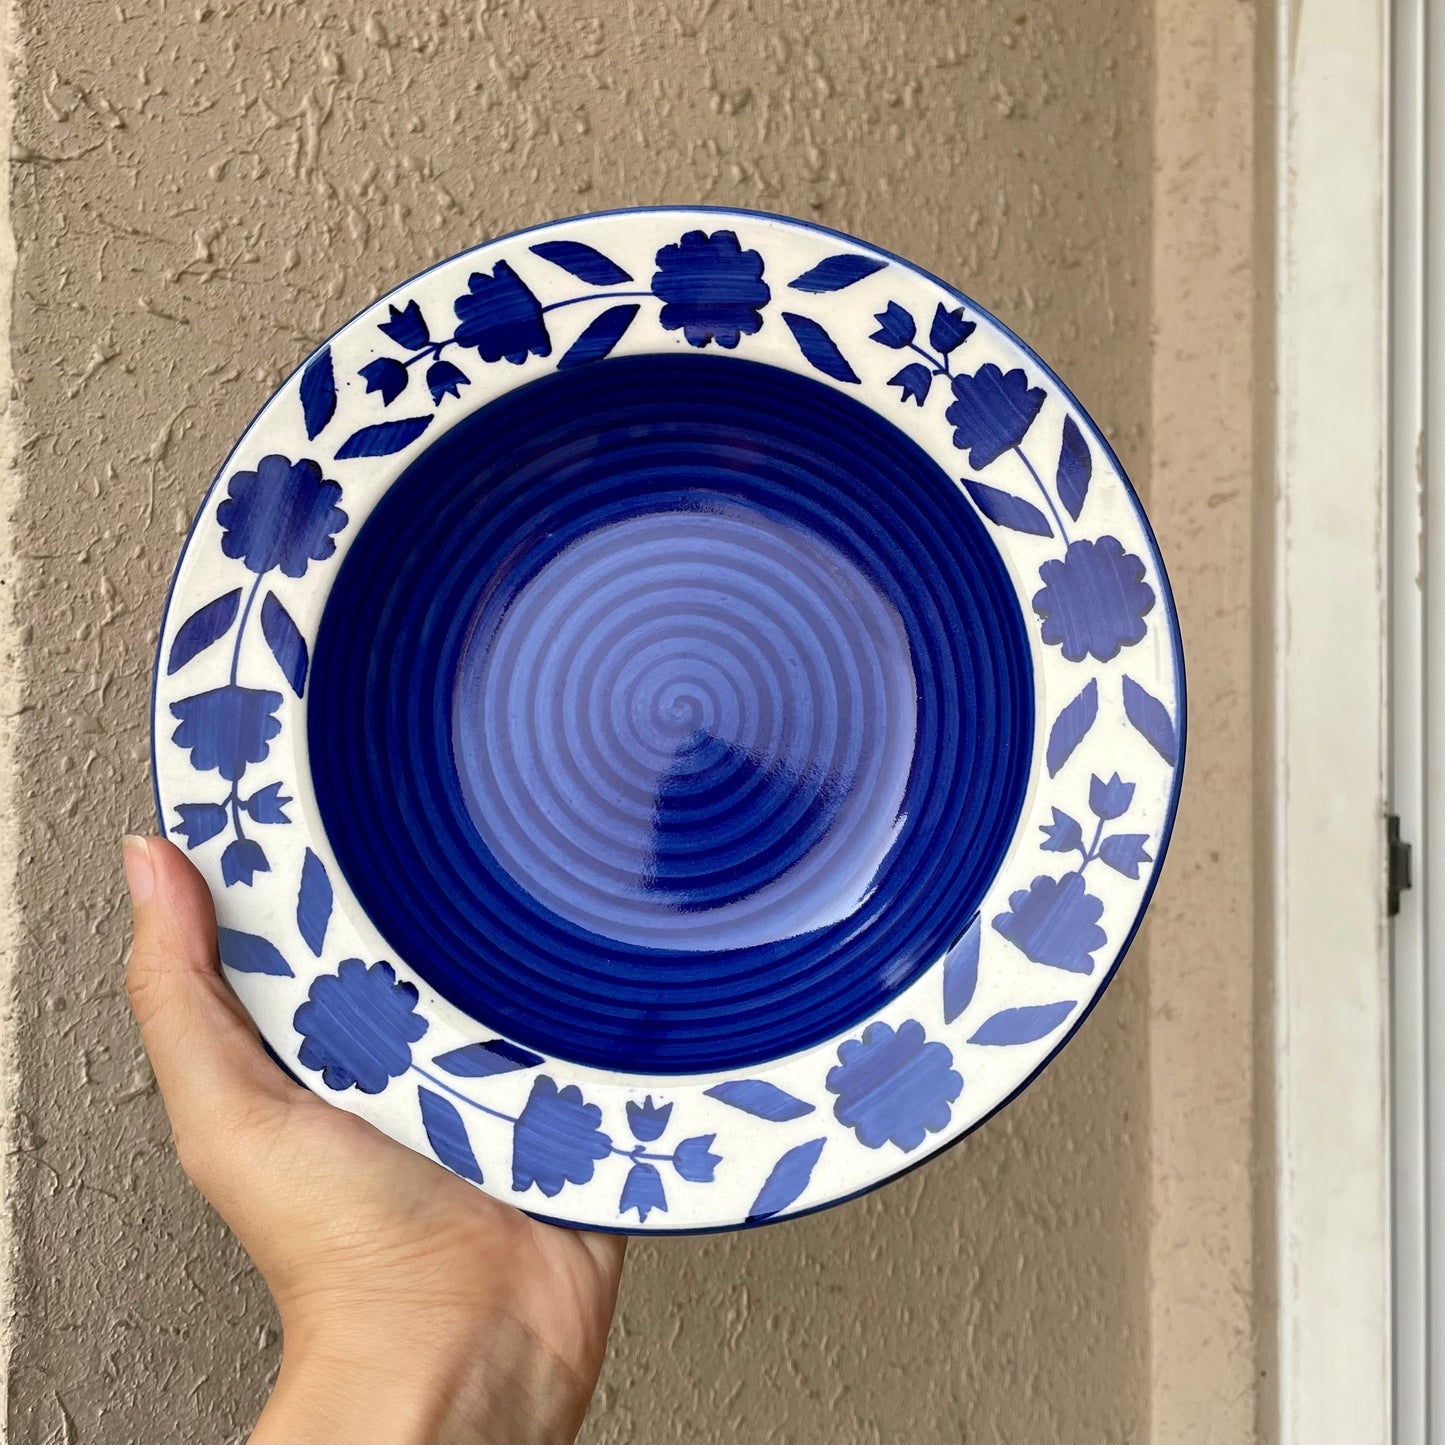 Buy Blue floral pasta plates Online